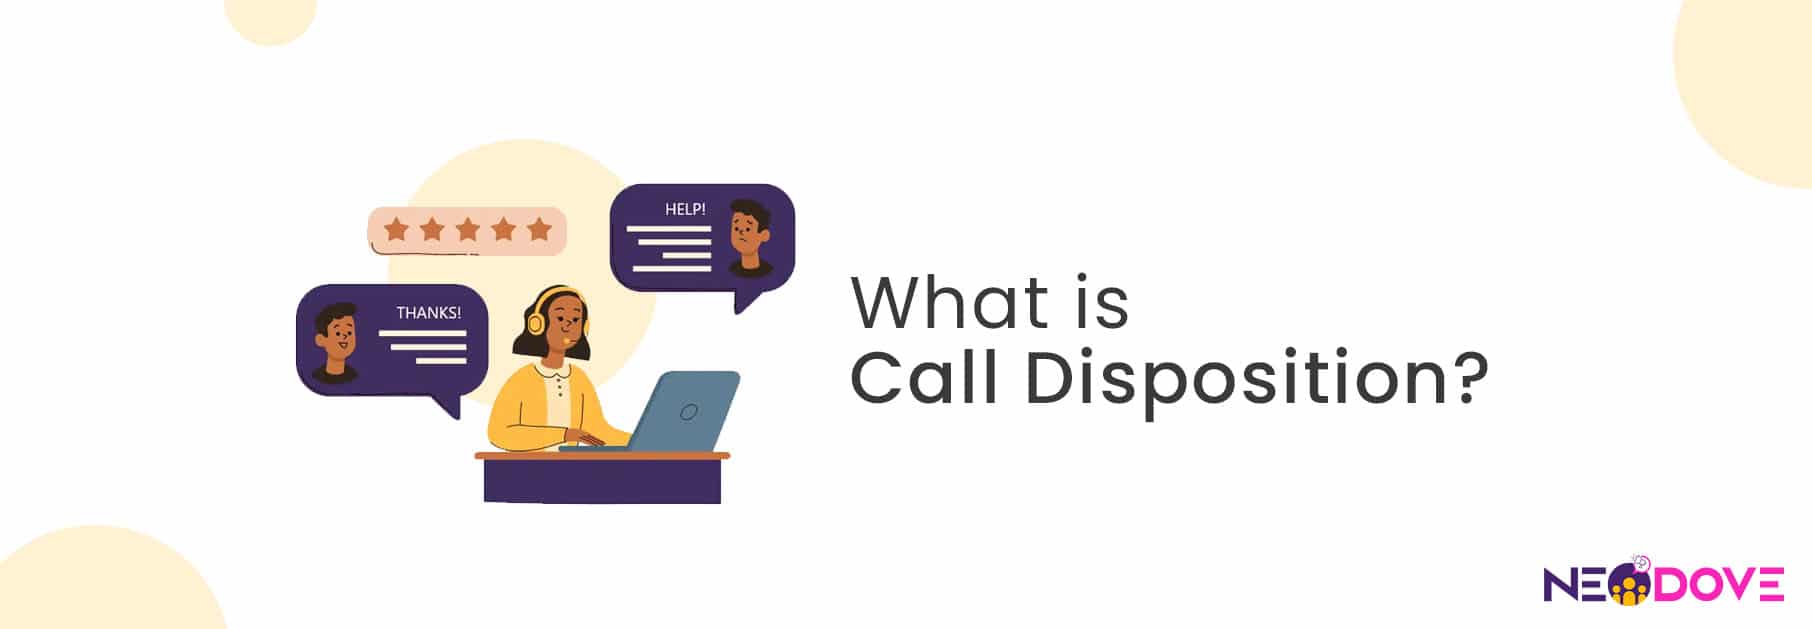 call disposition